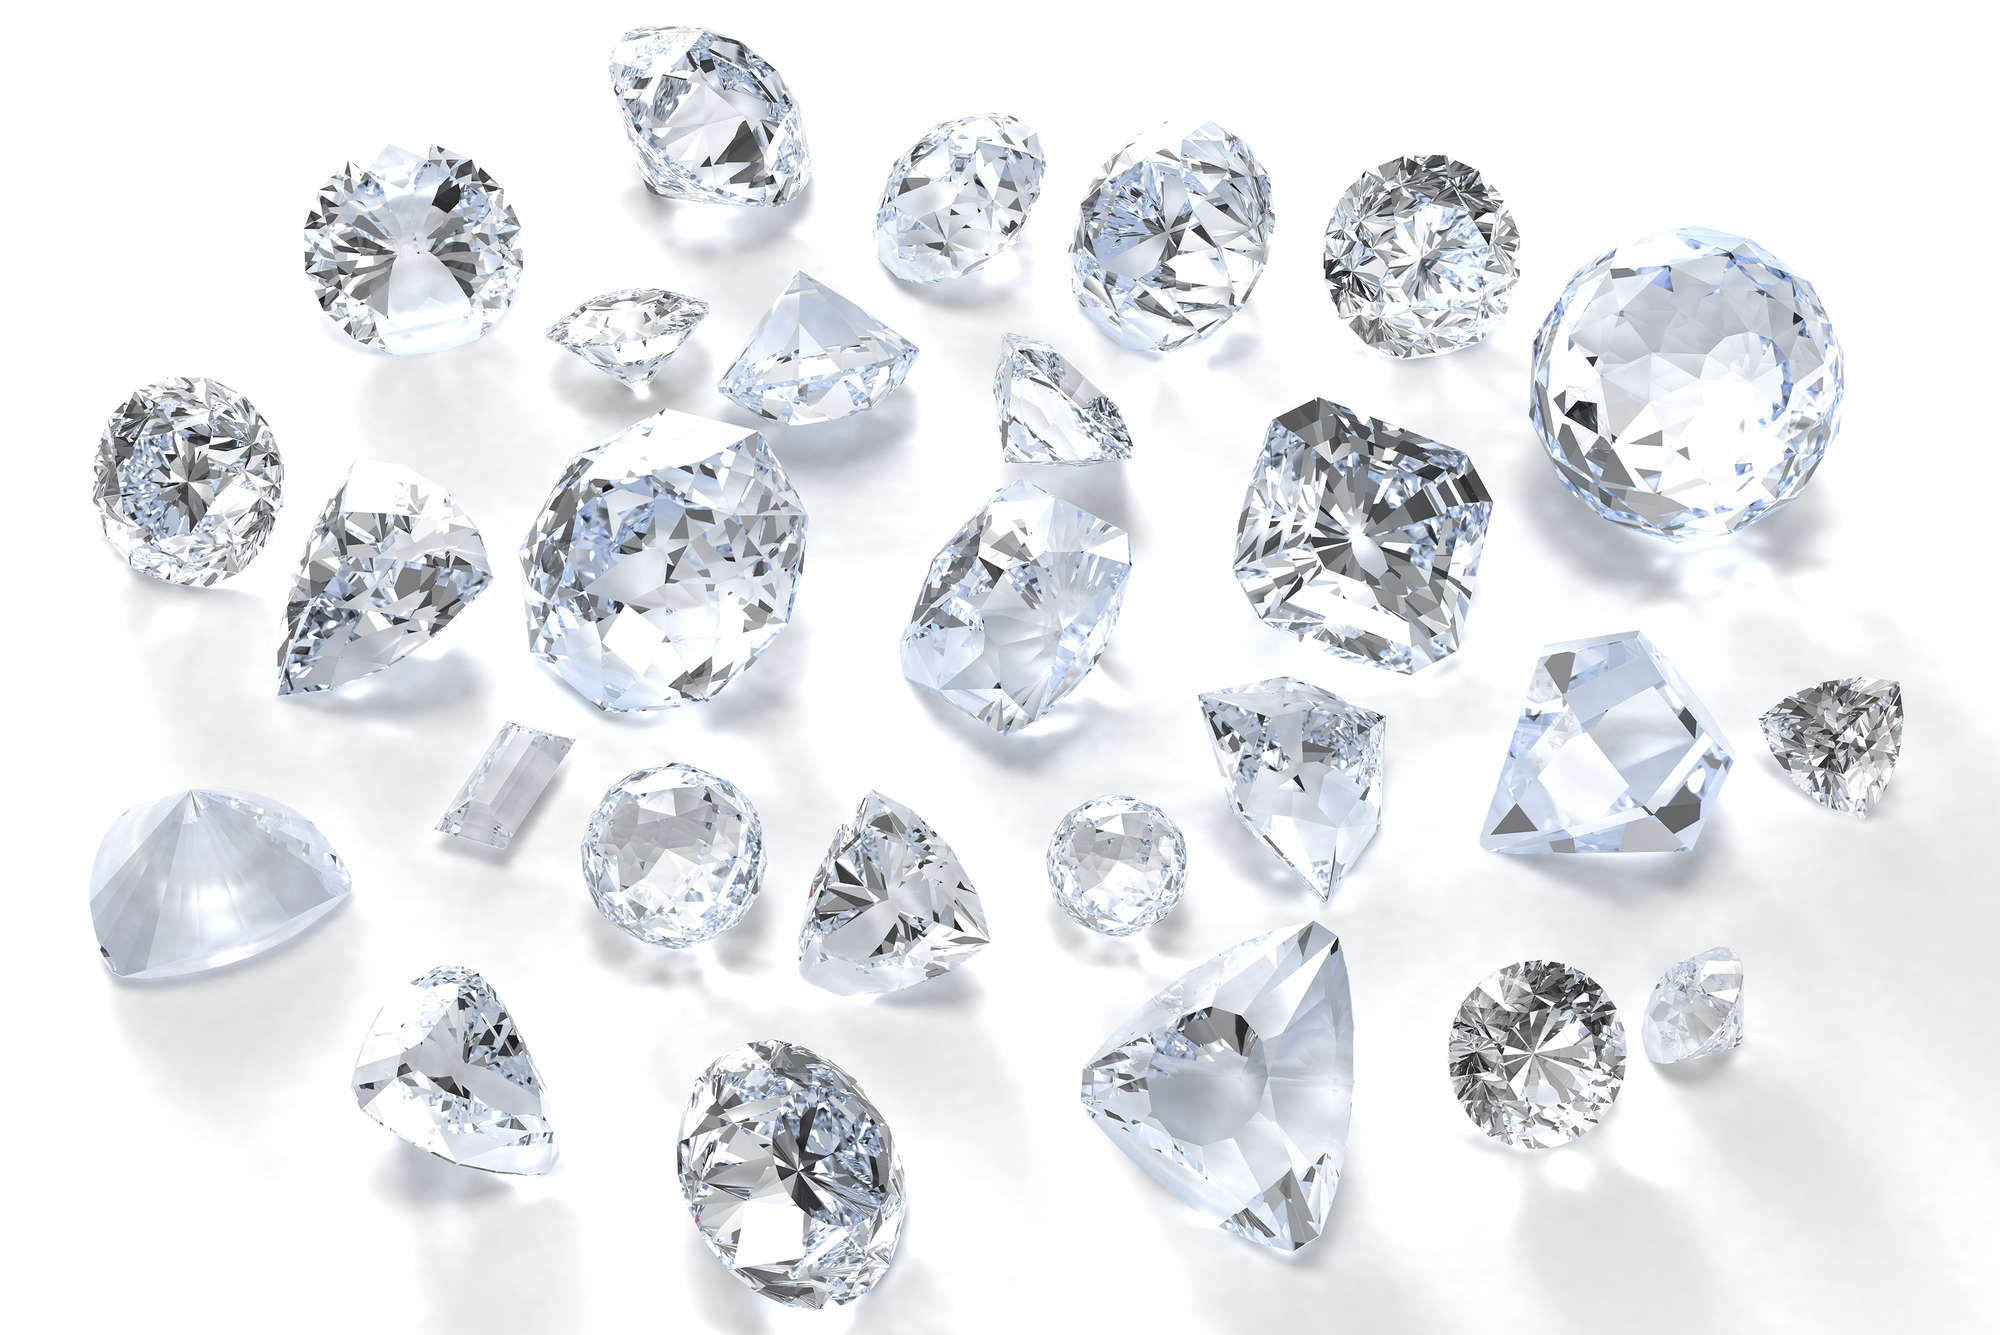             Fototapete geschliffene Diamanten – Perlmutt Glattvlies
        